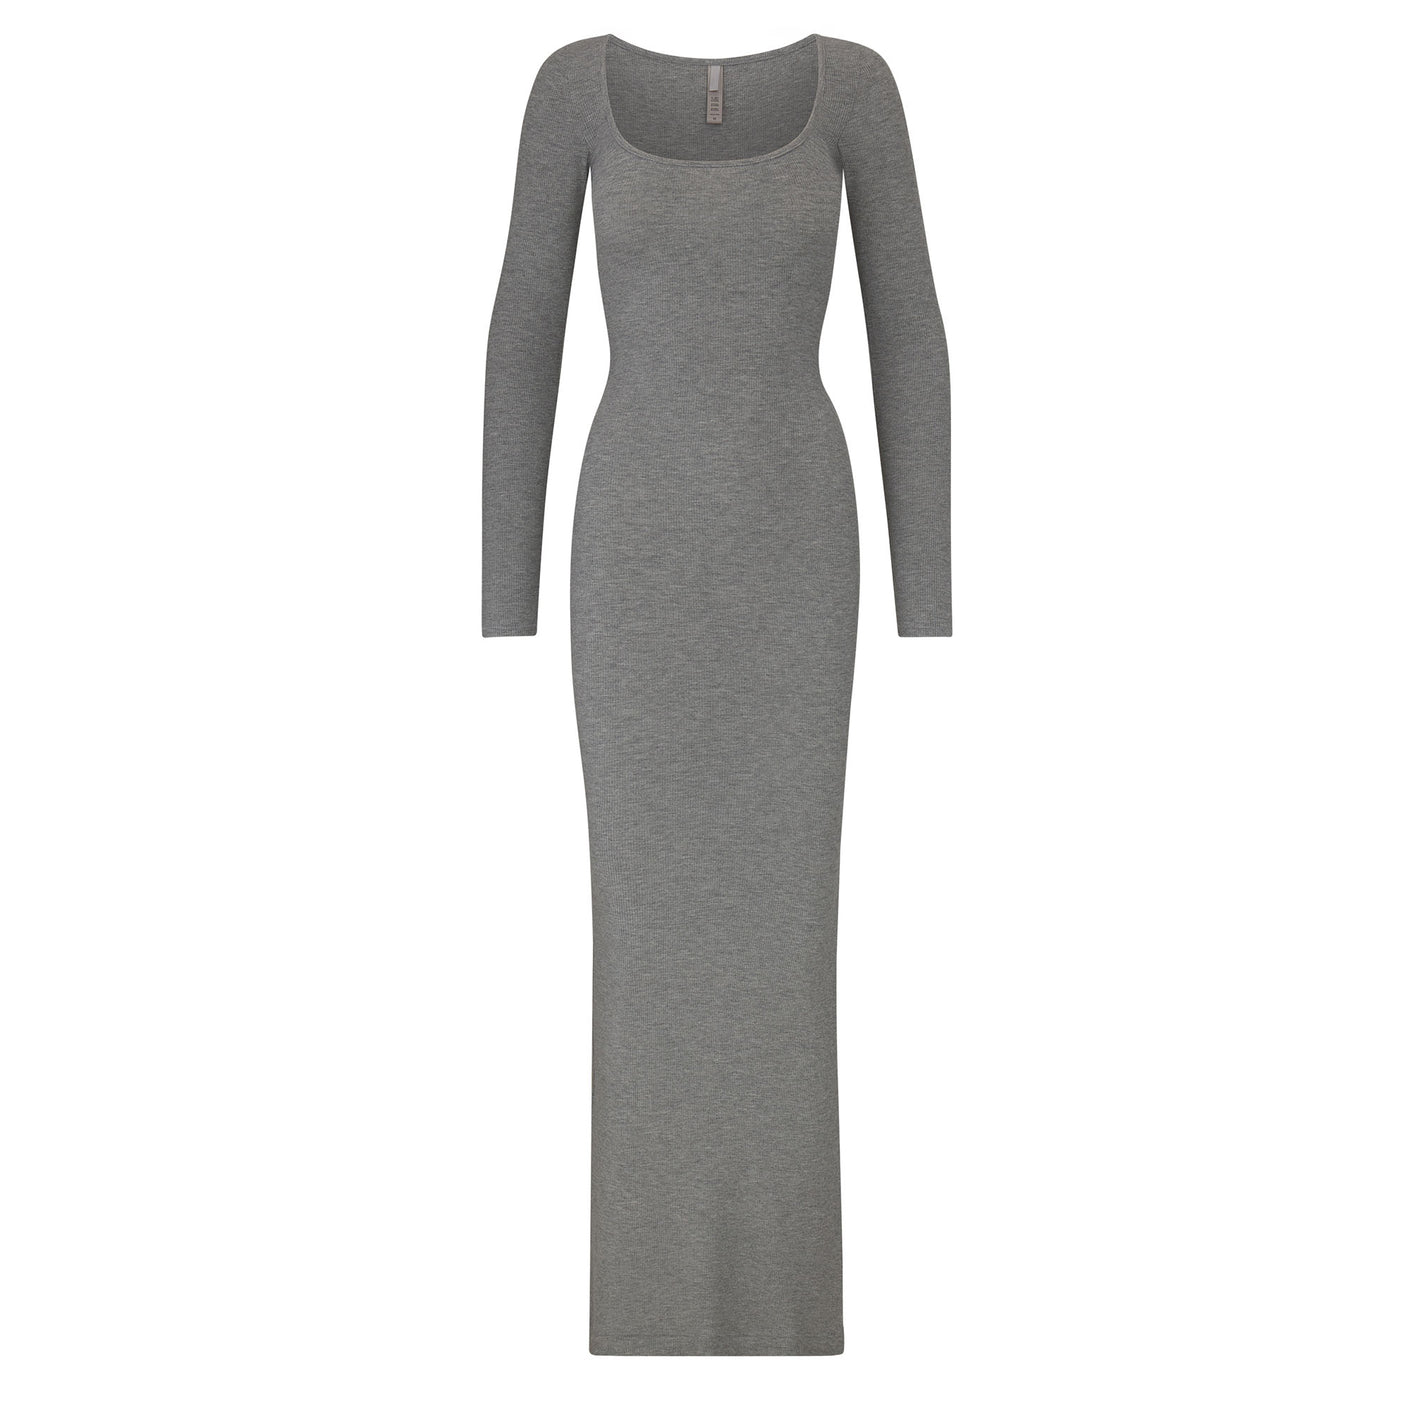 Pdxnyxx Long Sleeve Maxi Dress for Women Soft Lounge Long Sleeve